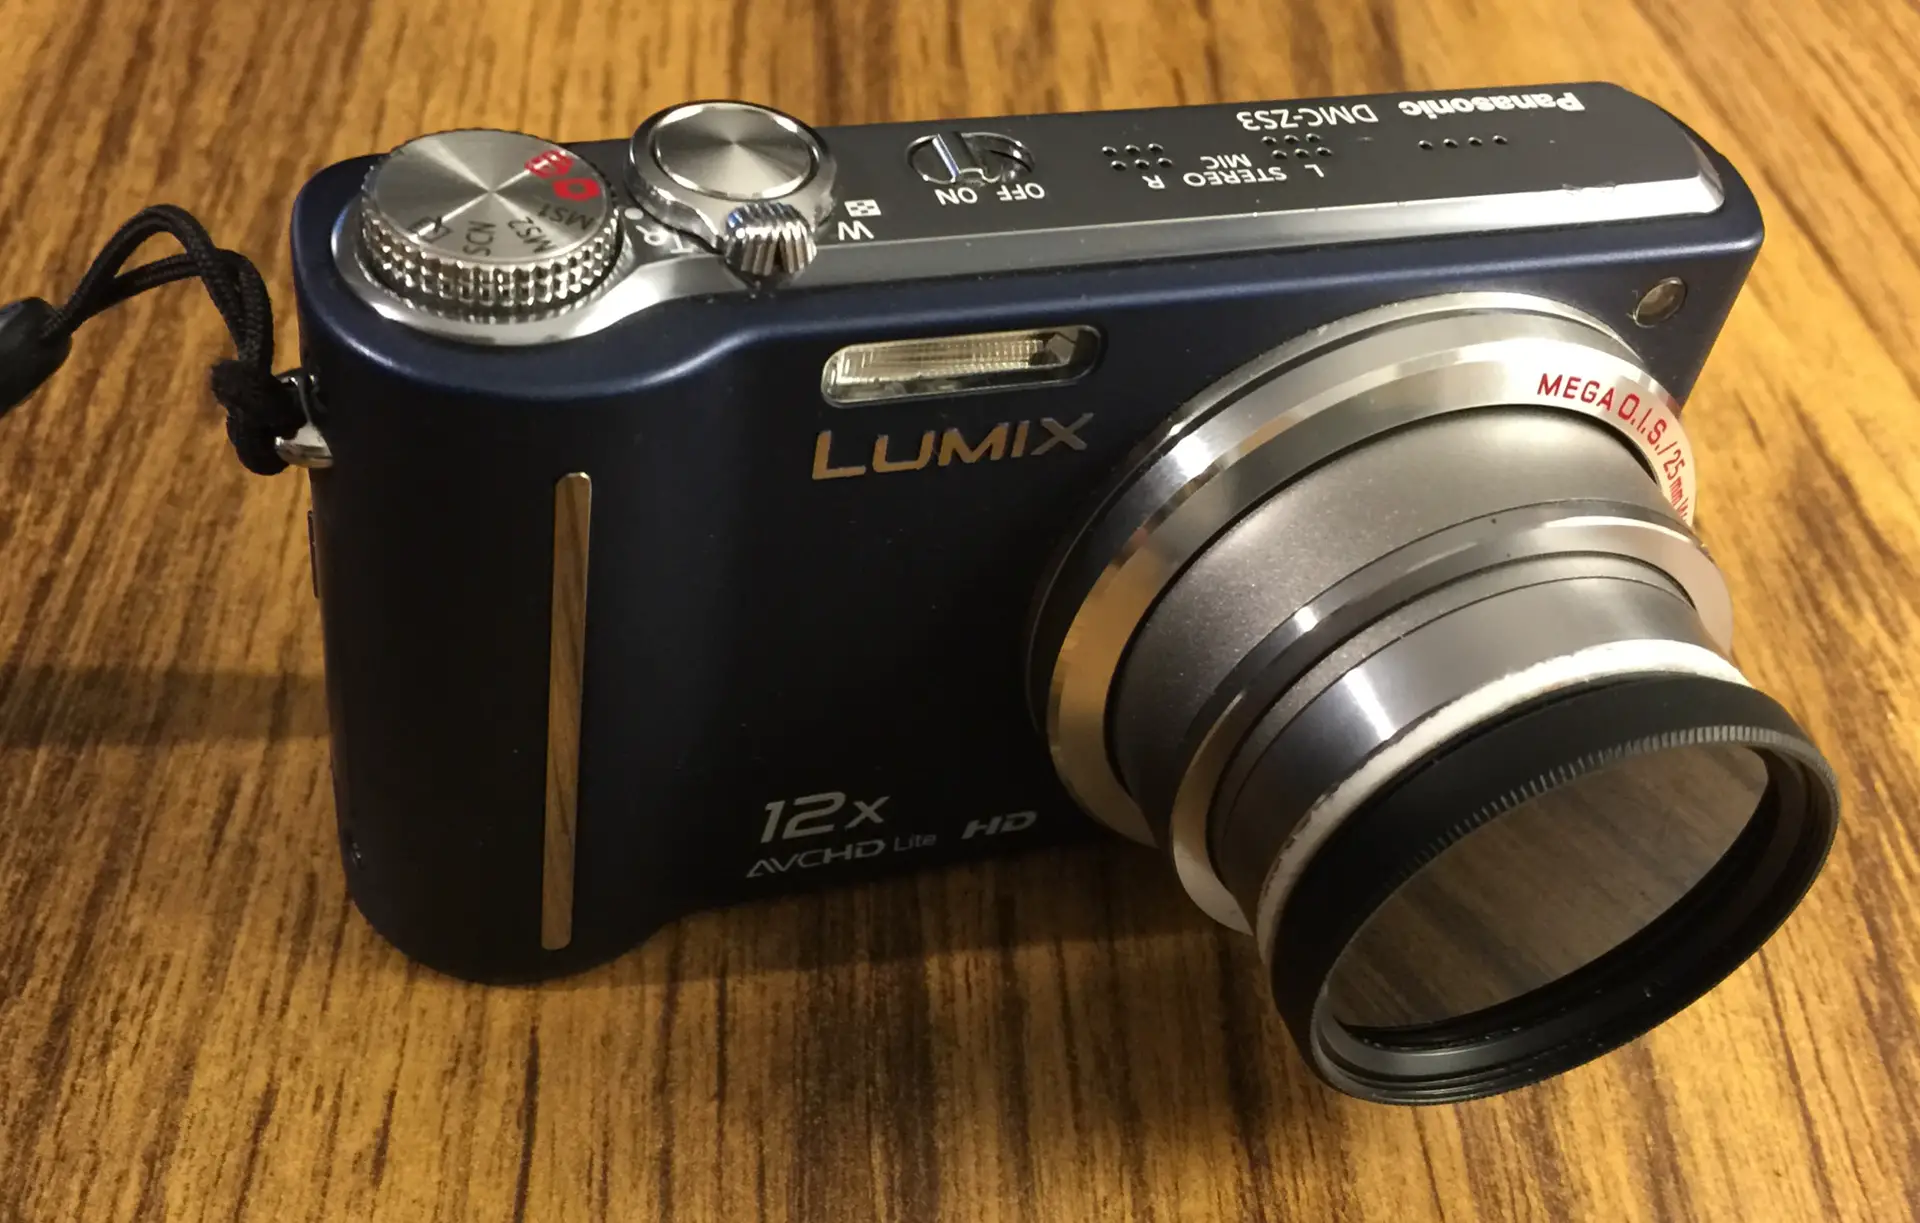 Lumix ZS3 camera with IR filter attached